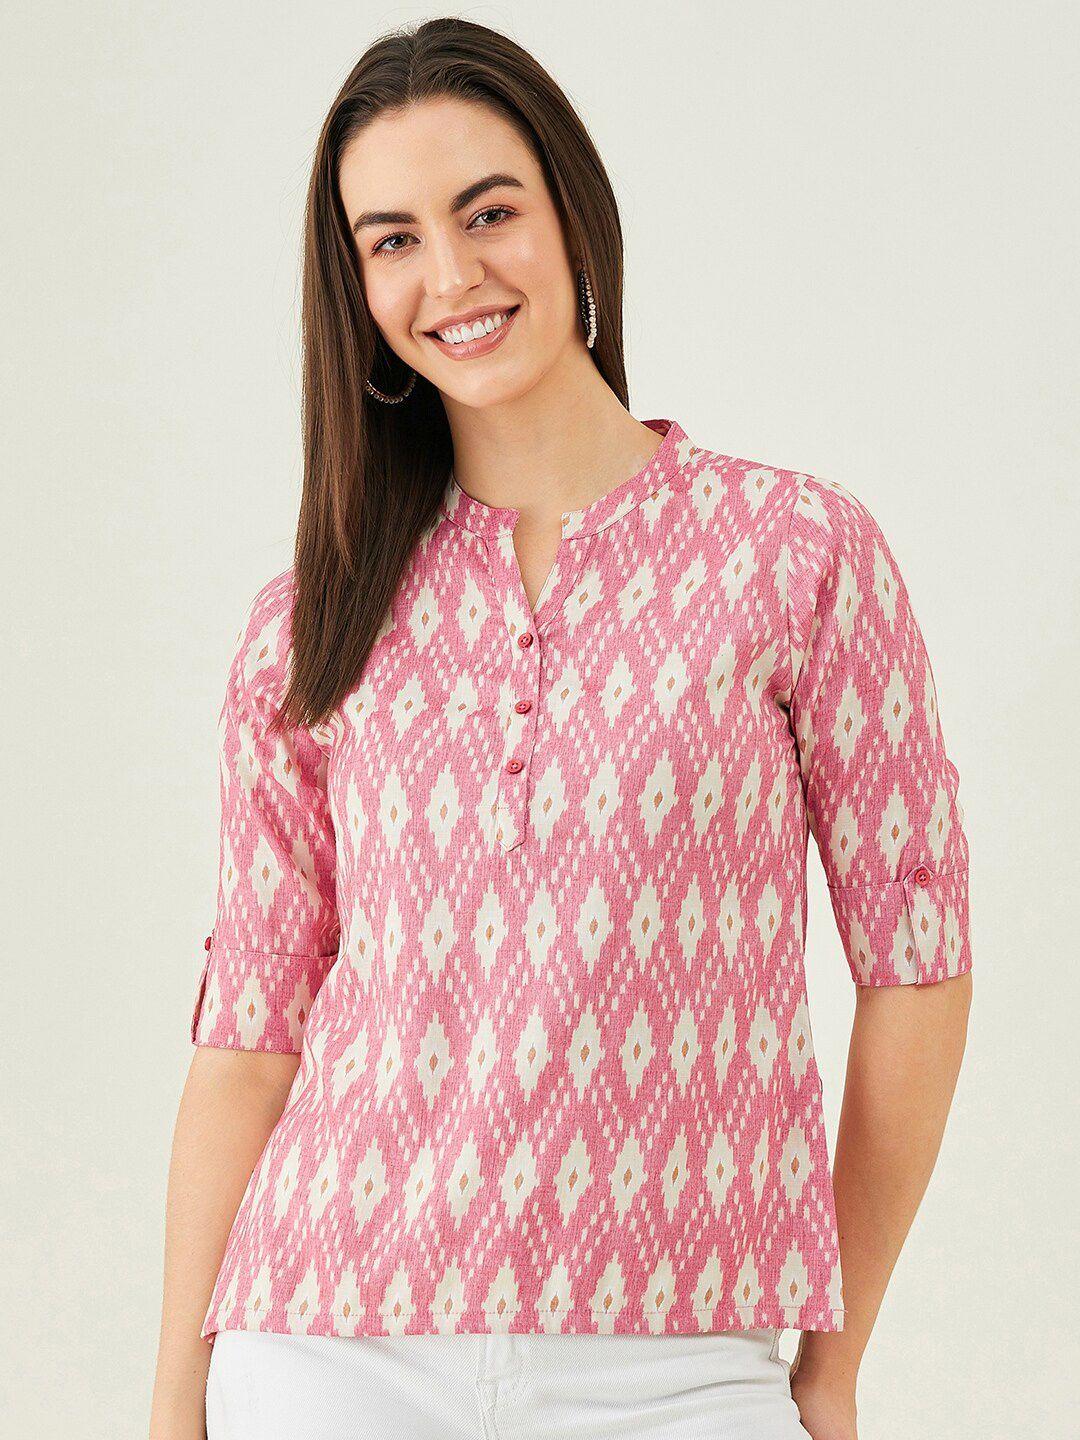 modeve geometric printed mandarin collar roll-up sleeves shirt style top